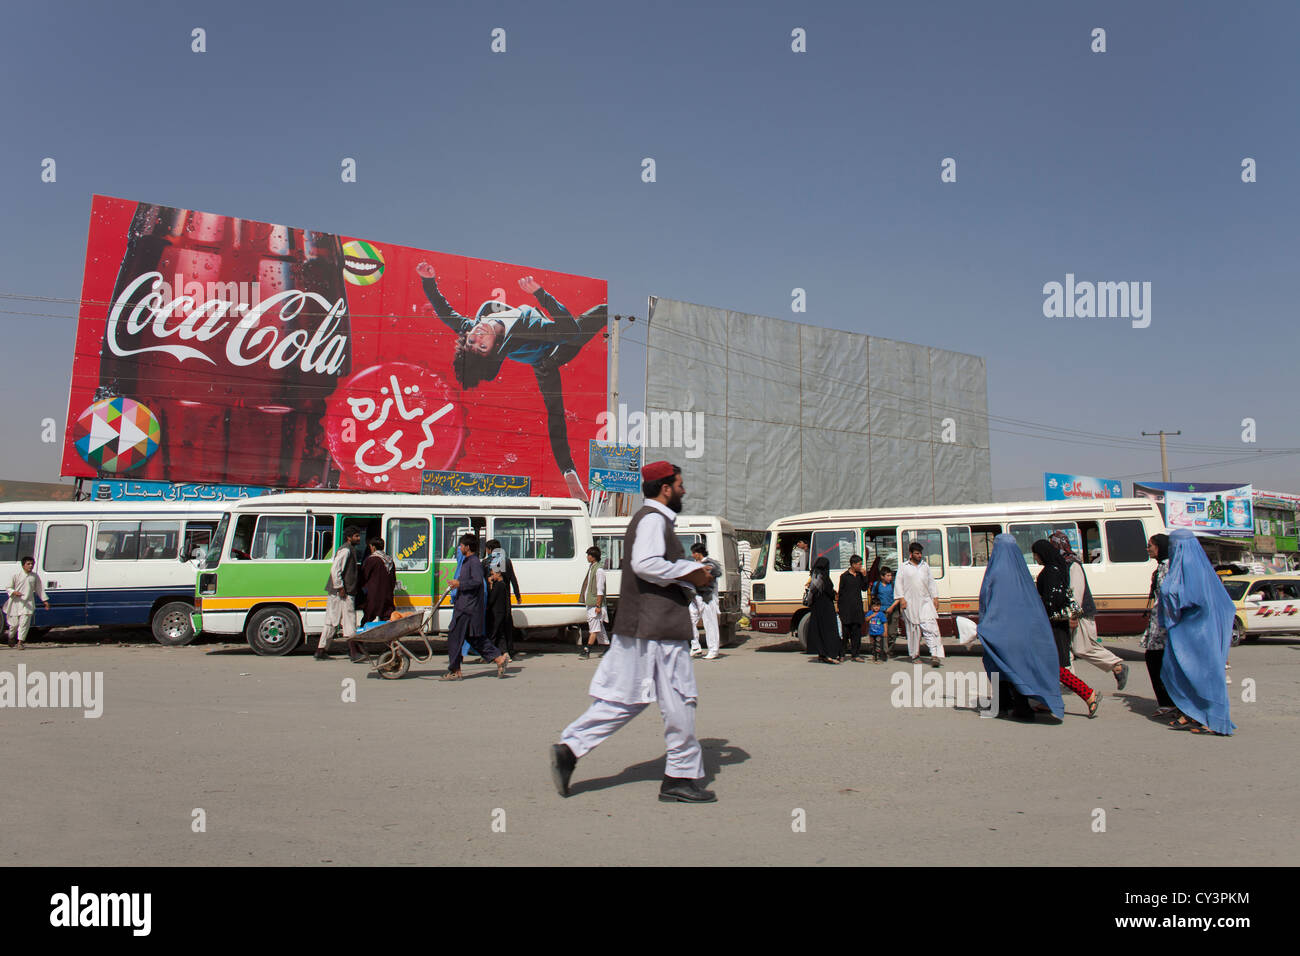 coca cola billboard in kabul Stock Photo